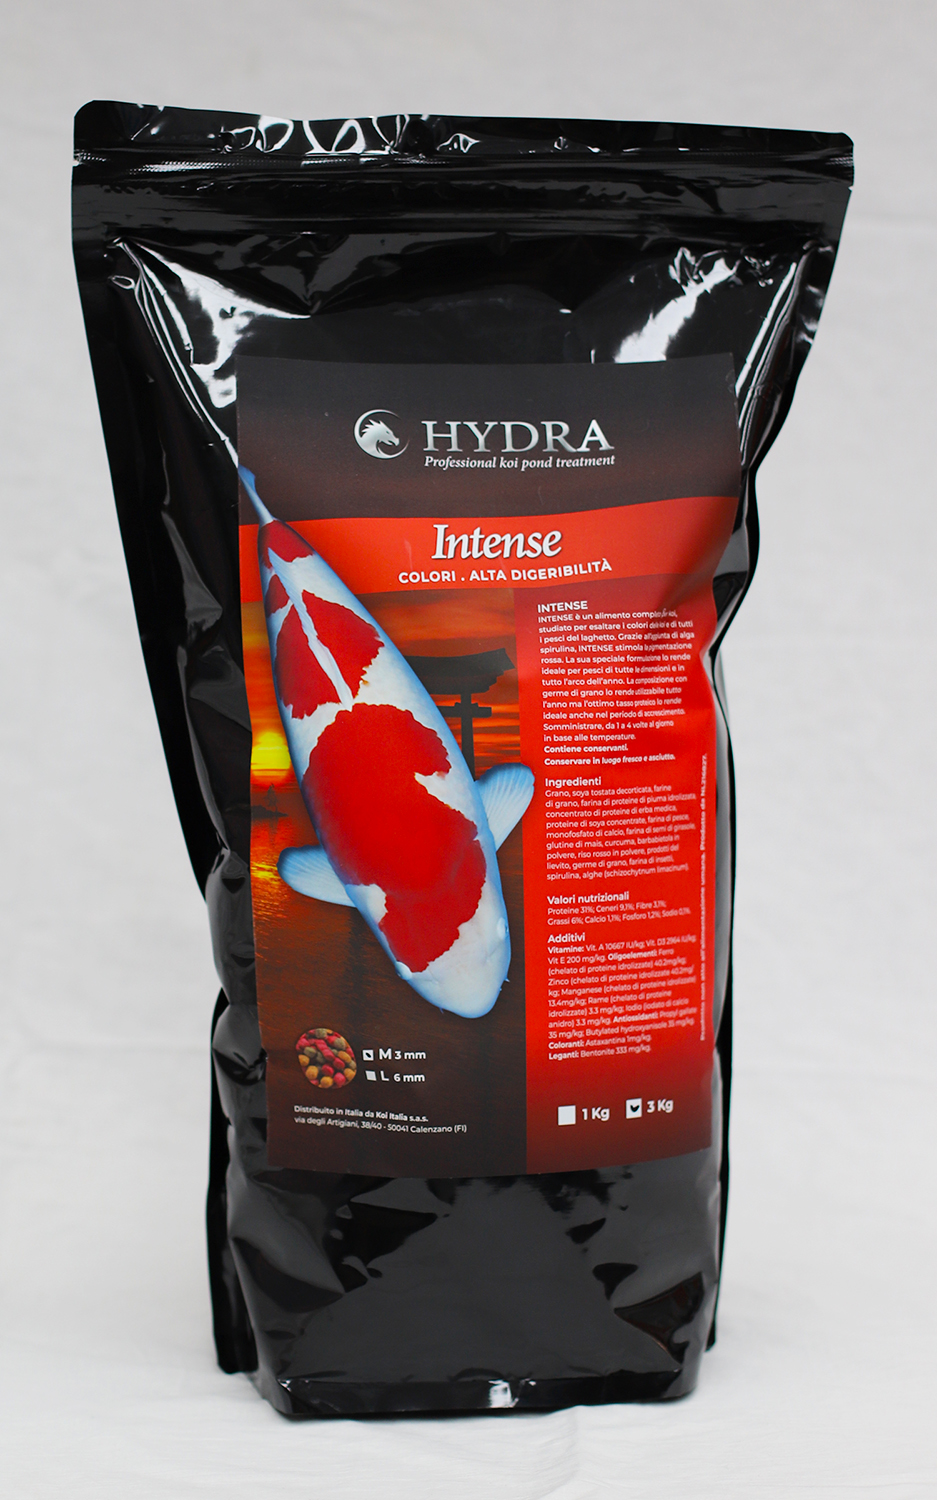 Hydra Intense 3kg 6mm